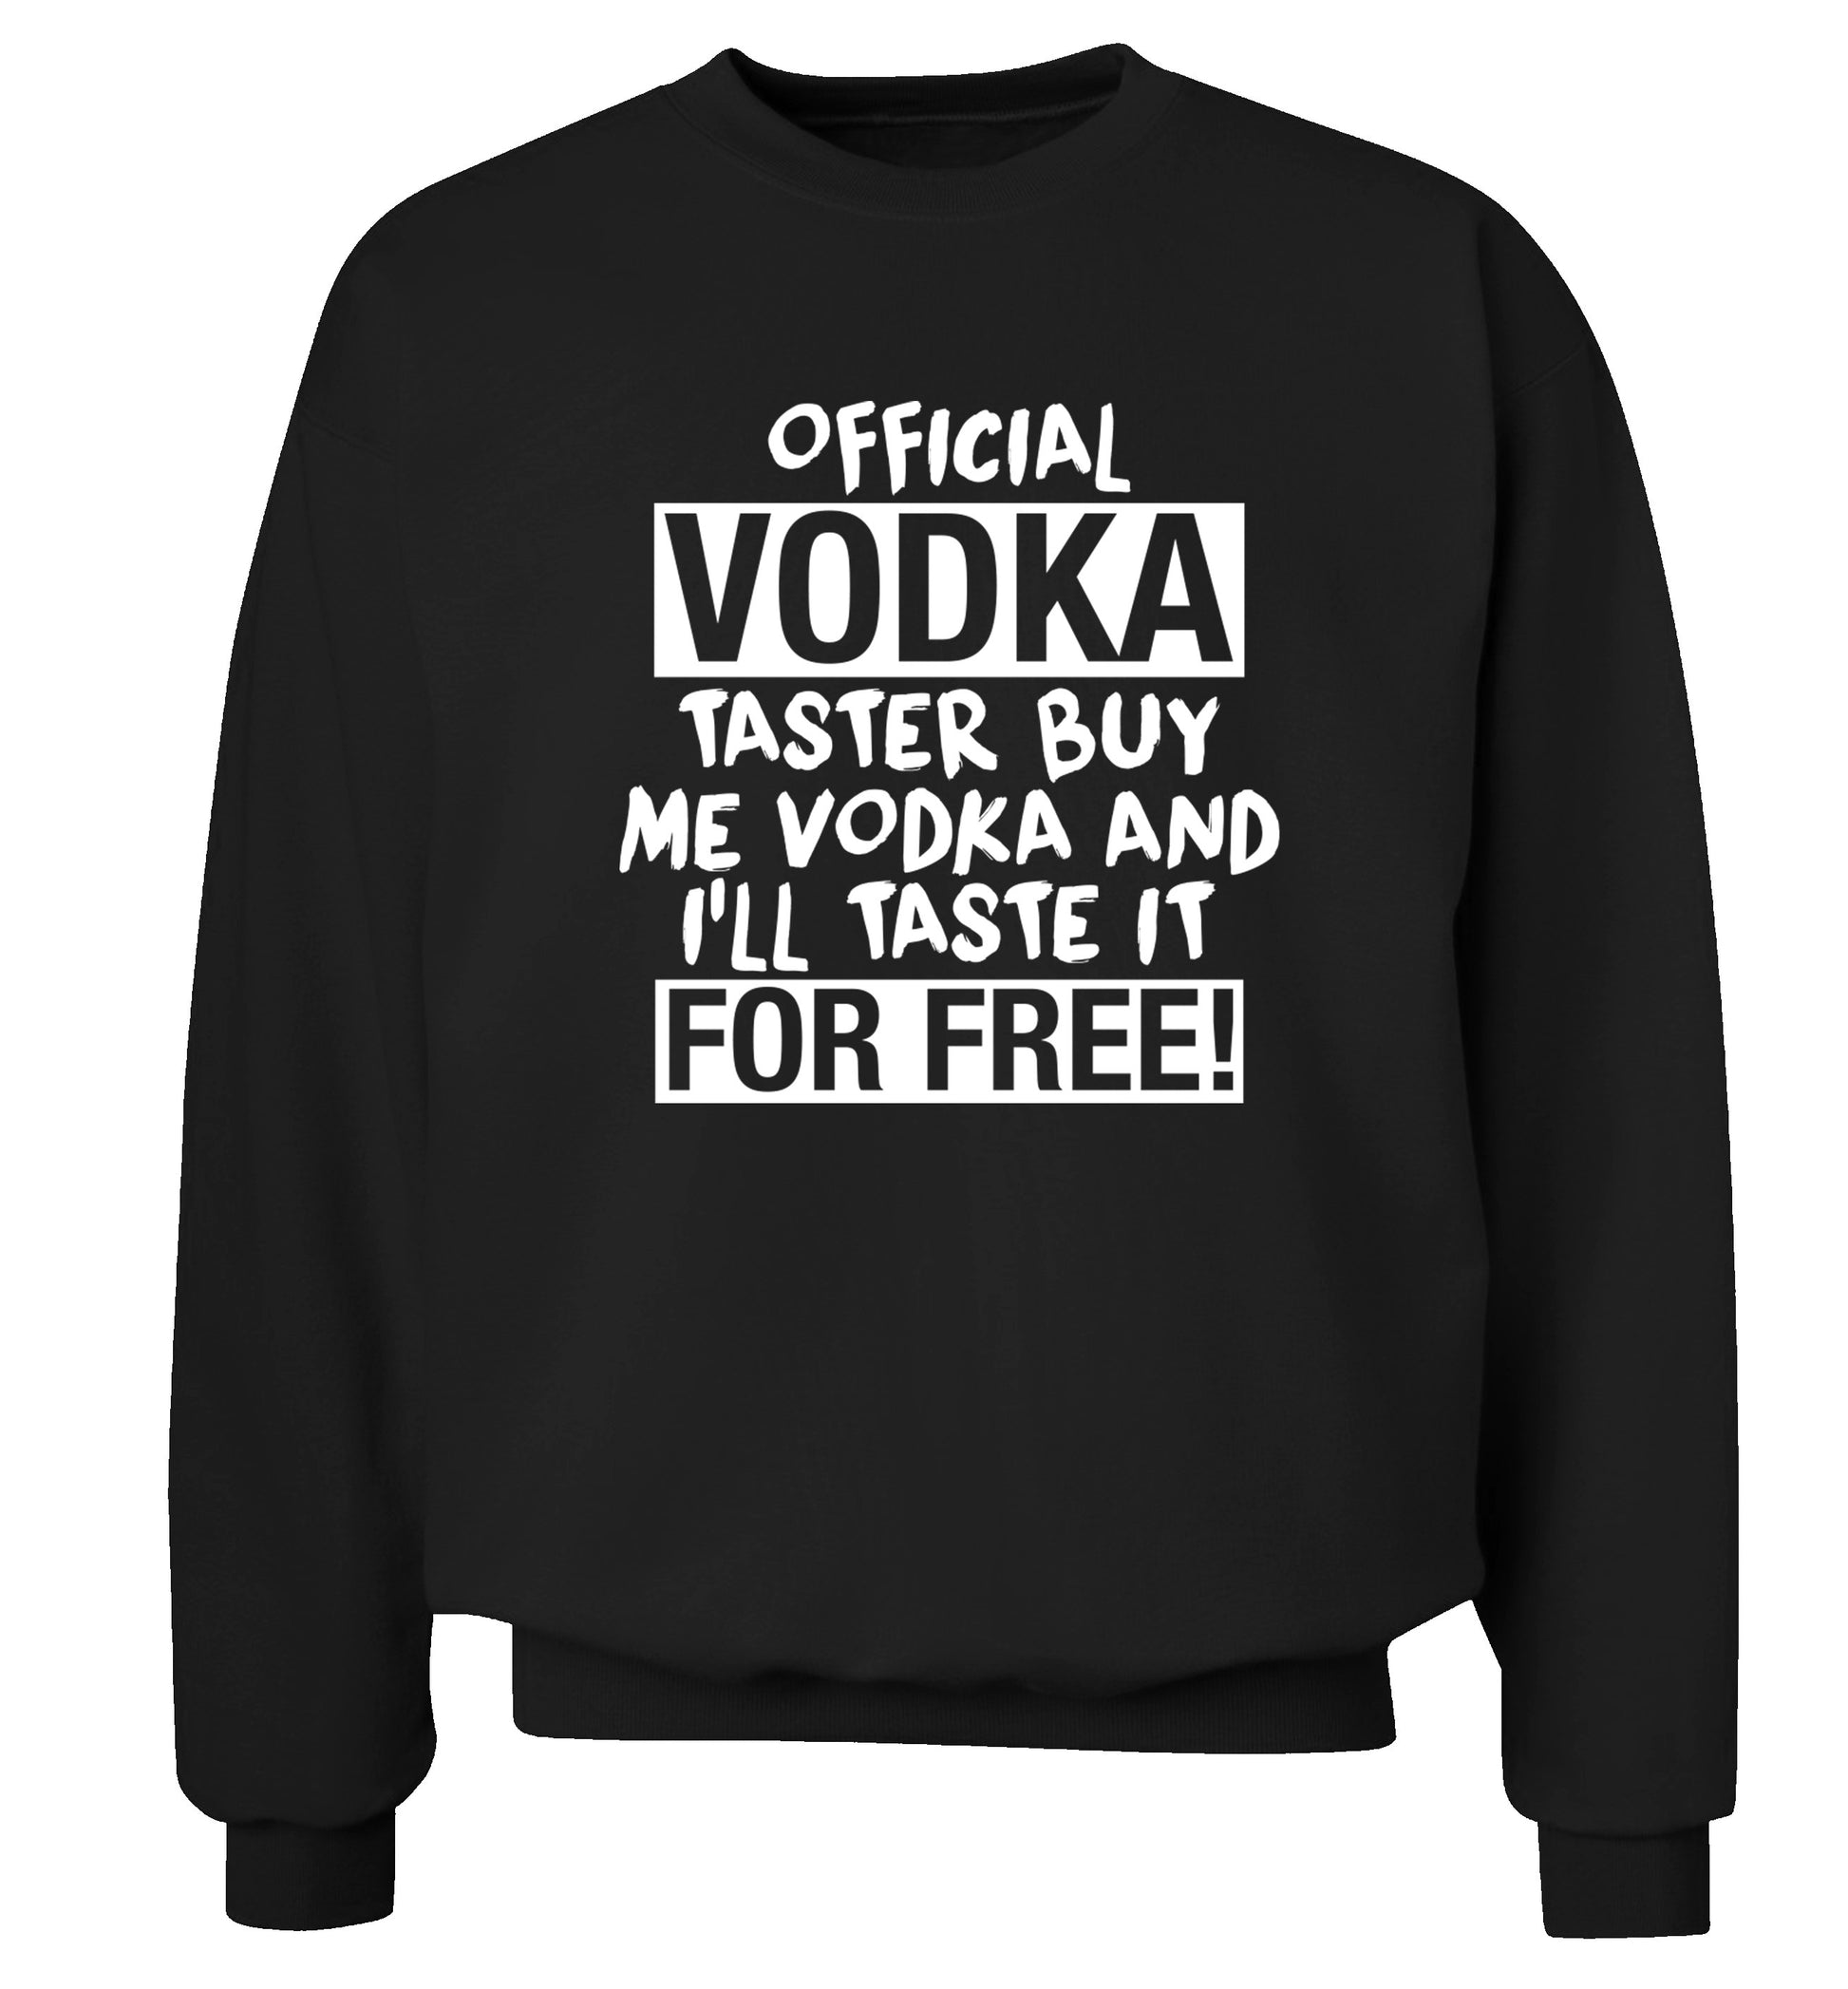 Official vodka taster buy me vodka and I'll taste it for free Adult's unisex black Sweater 2XL